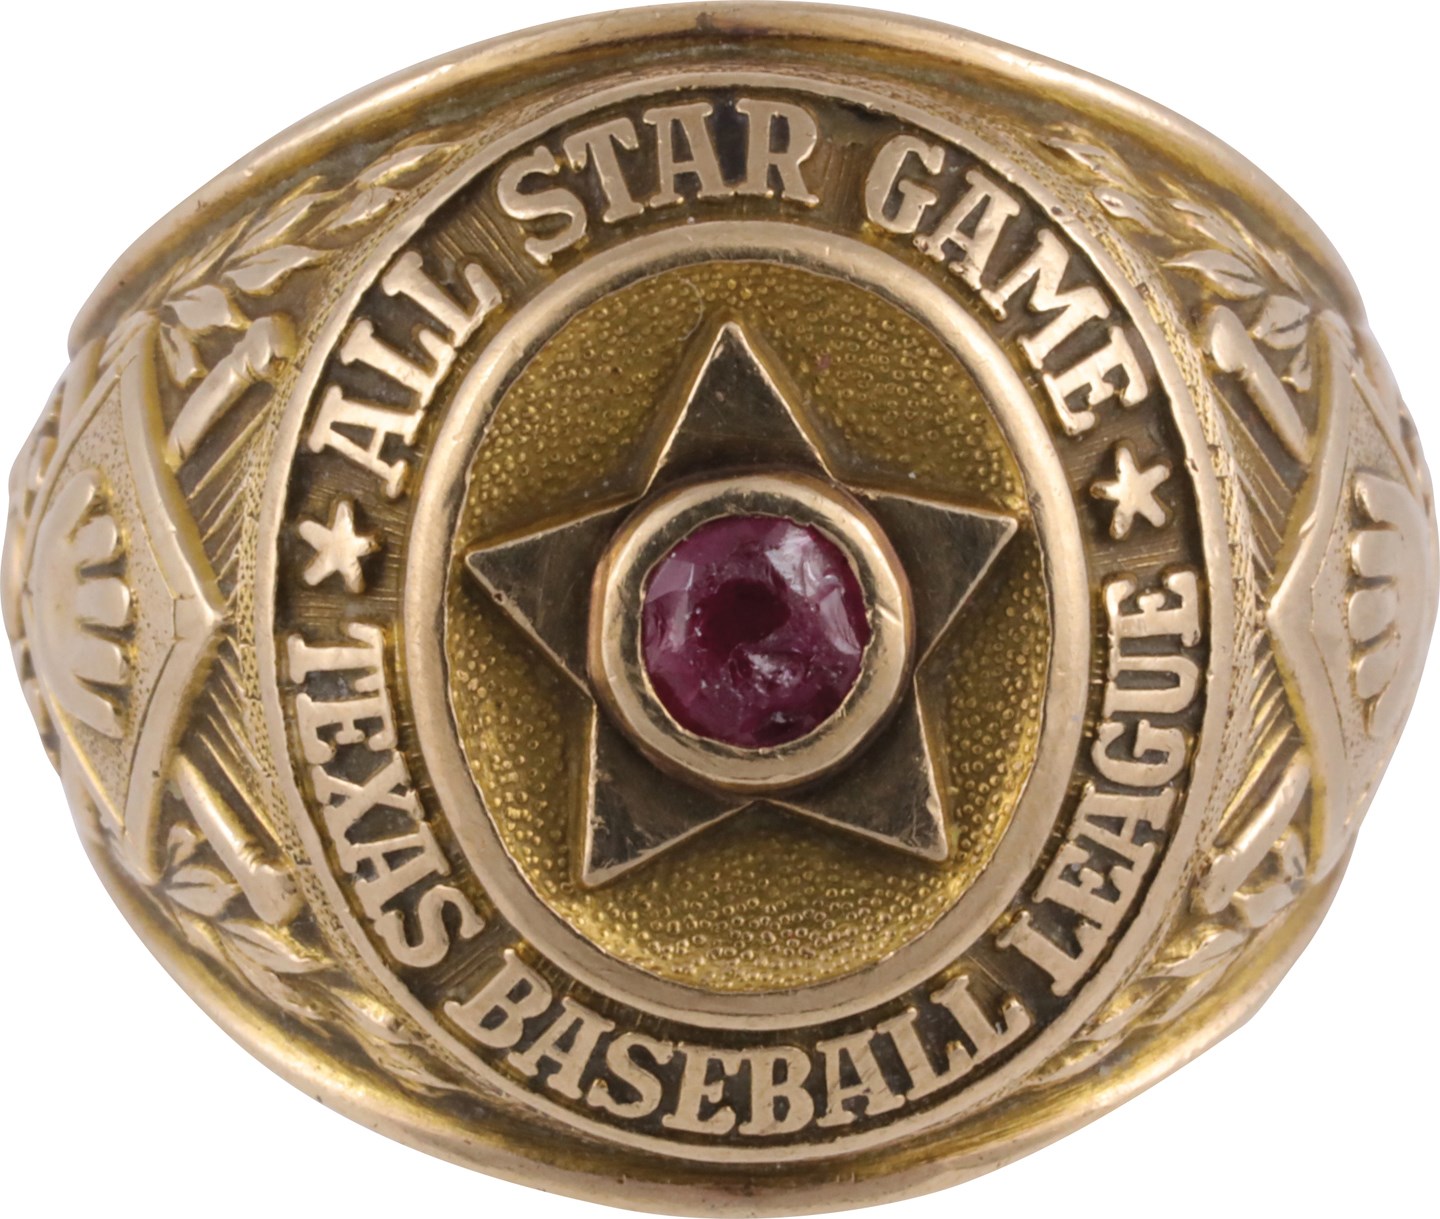 - 1953 Phil Masi Texas League All-Star Game Ring